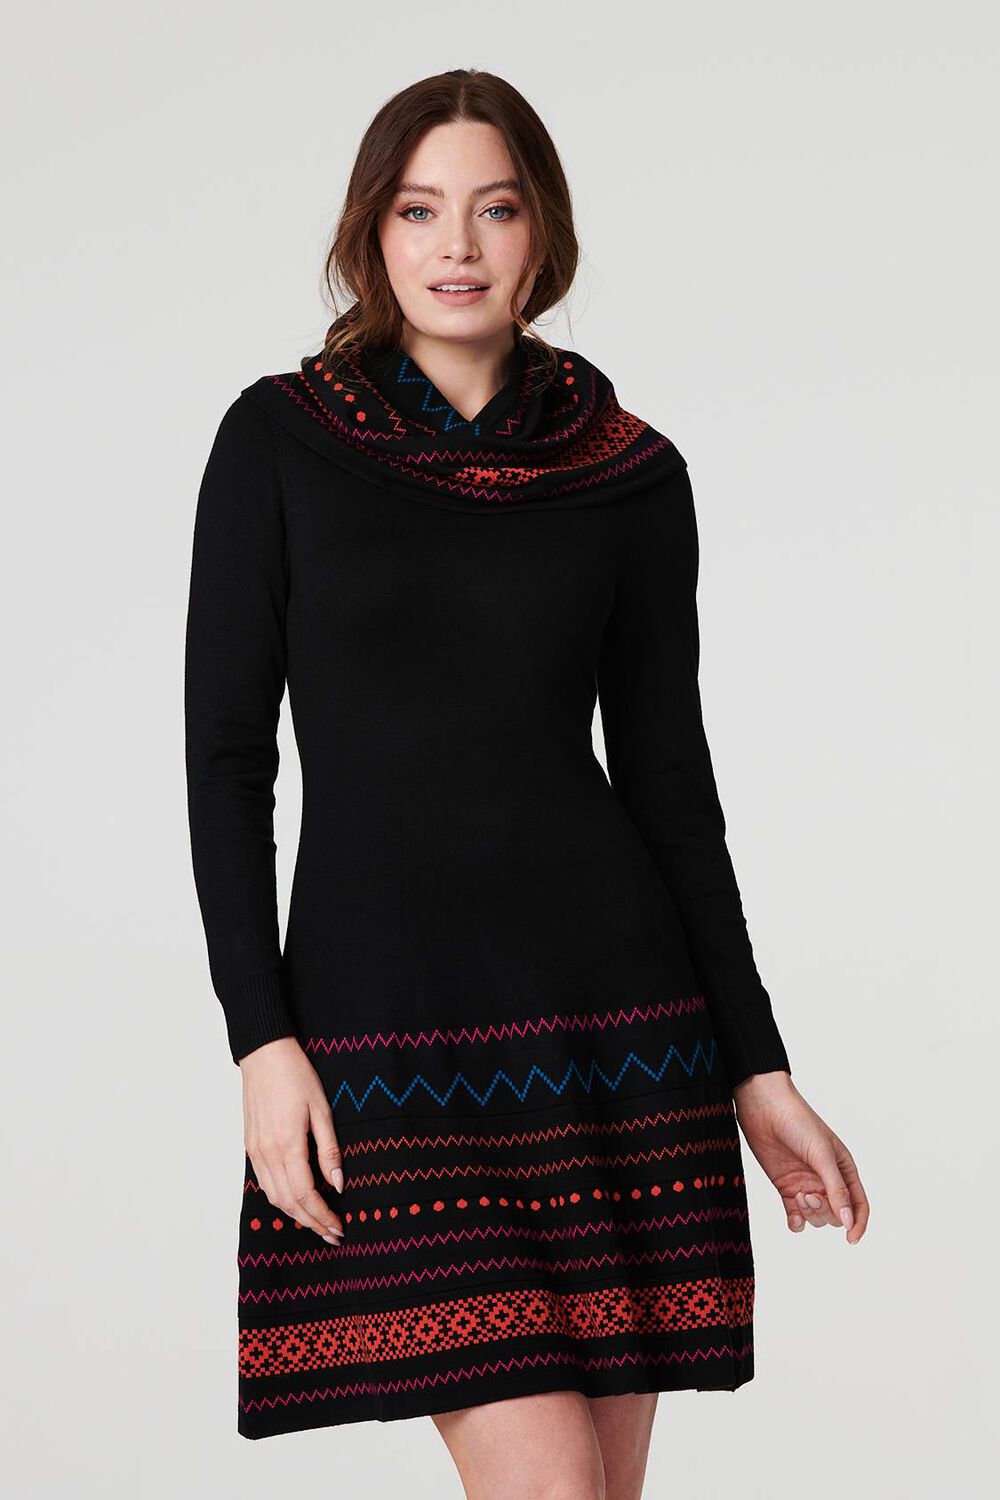 Izabel London Black - Printed Knit Skater Dress With Scarf, Size: 8